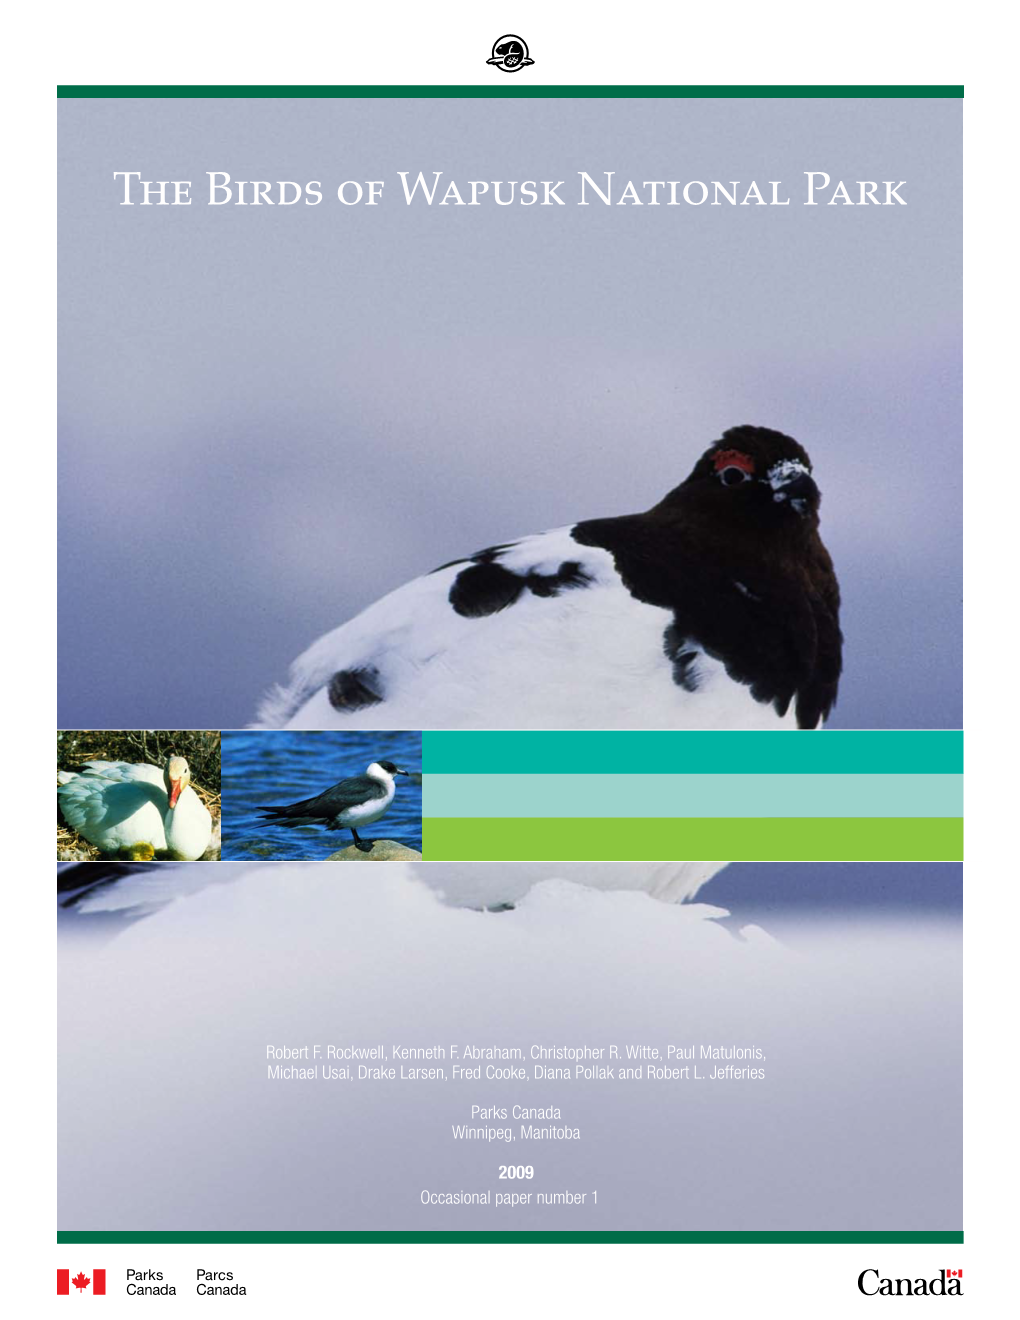 The Birds of Wapusk National Park